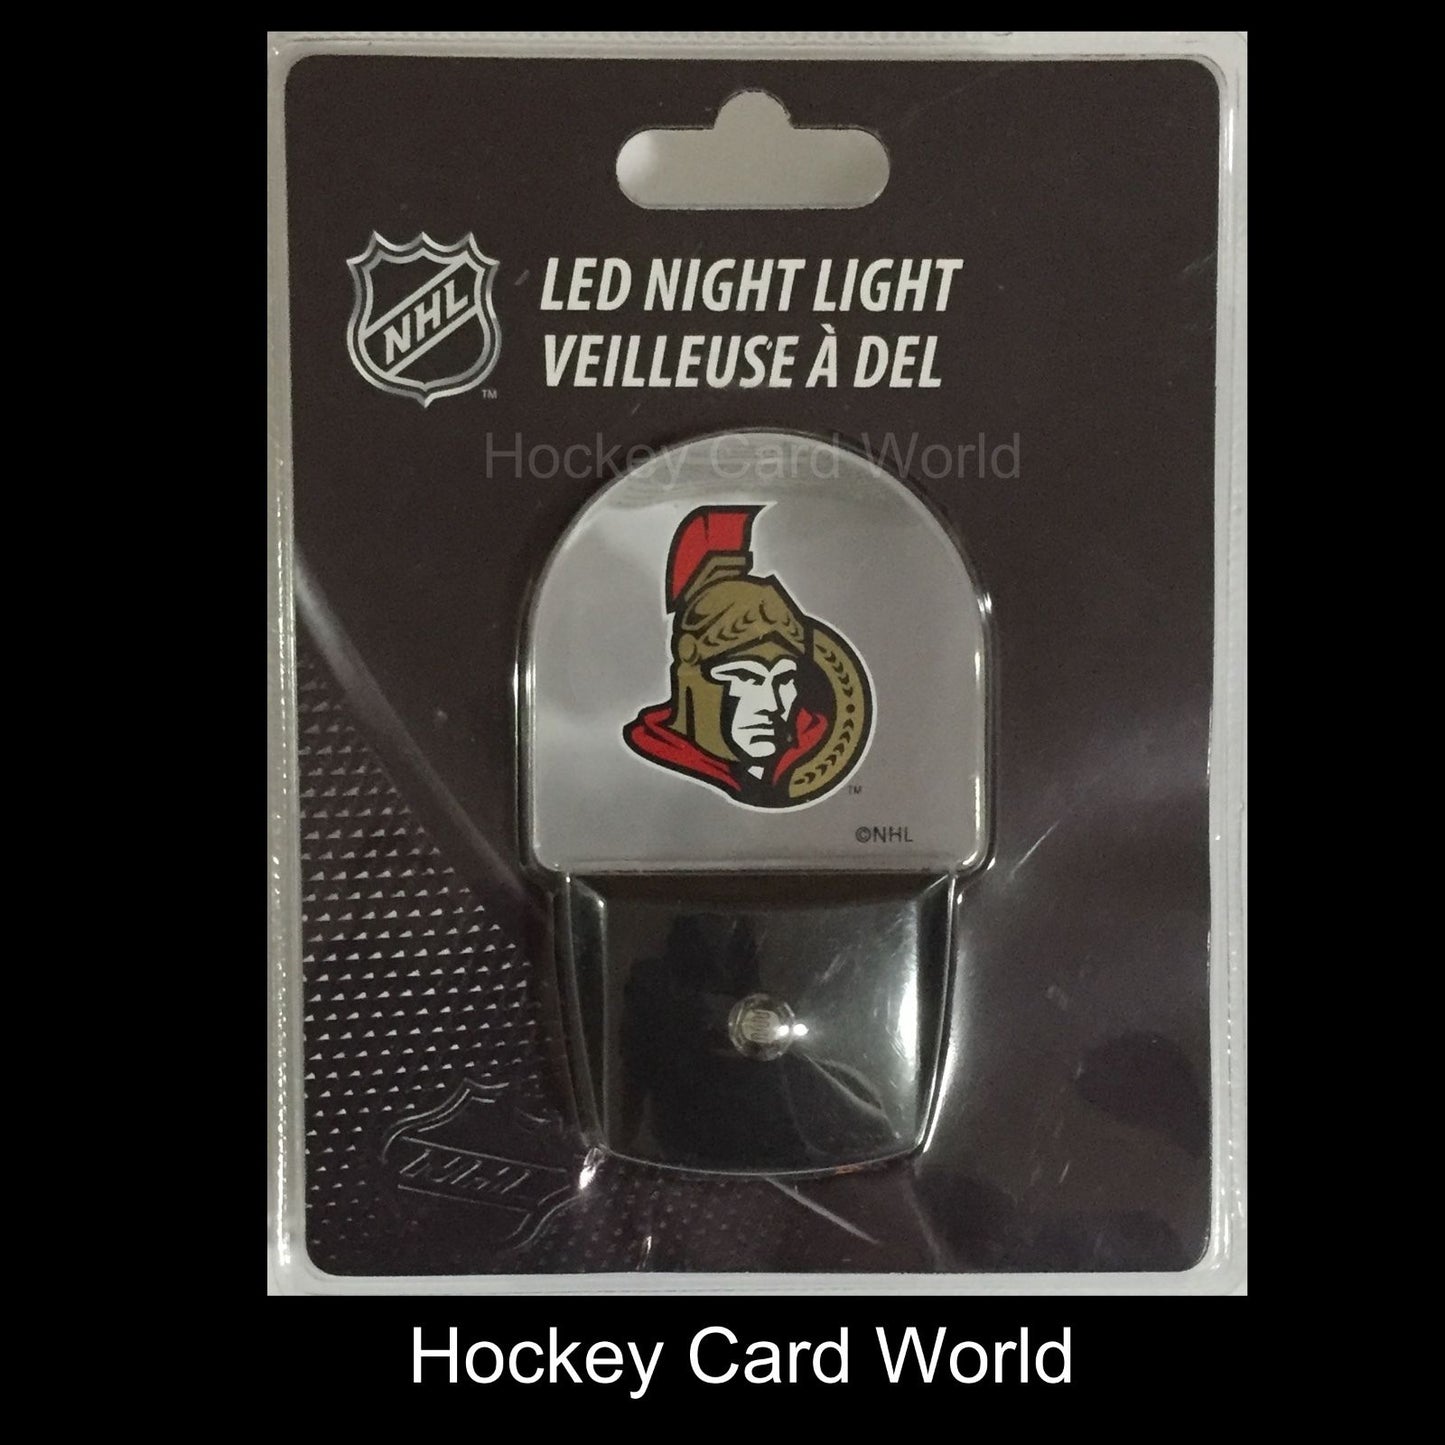  Ottawa Senators Licensed NHL LED Night Light - Brand New In Box Image 1